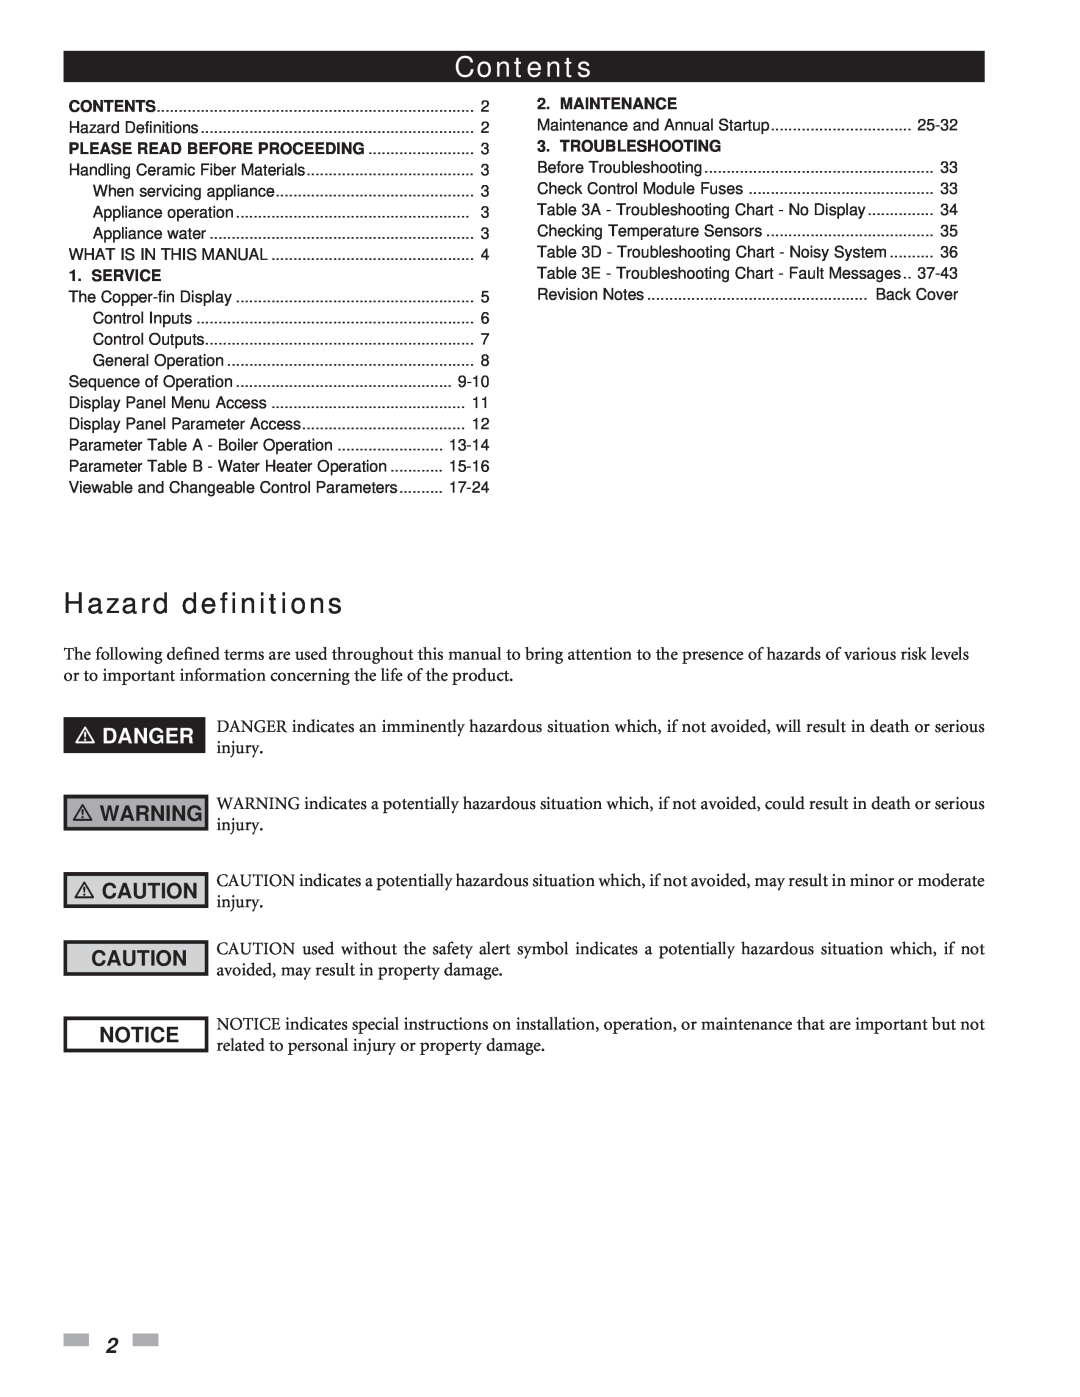 Lochinvar 2072, 402 service manual Hazard definitions, Danger, Contents 